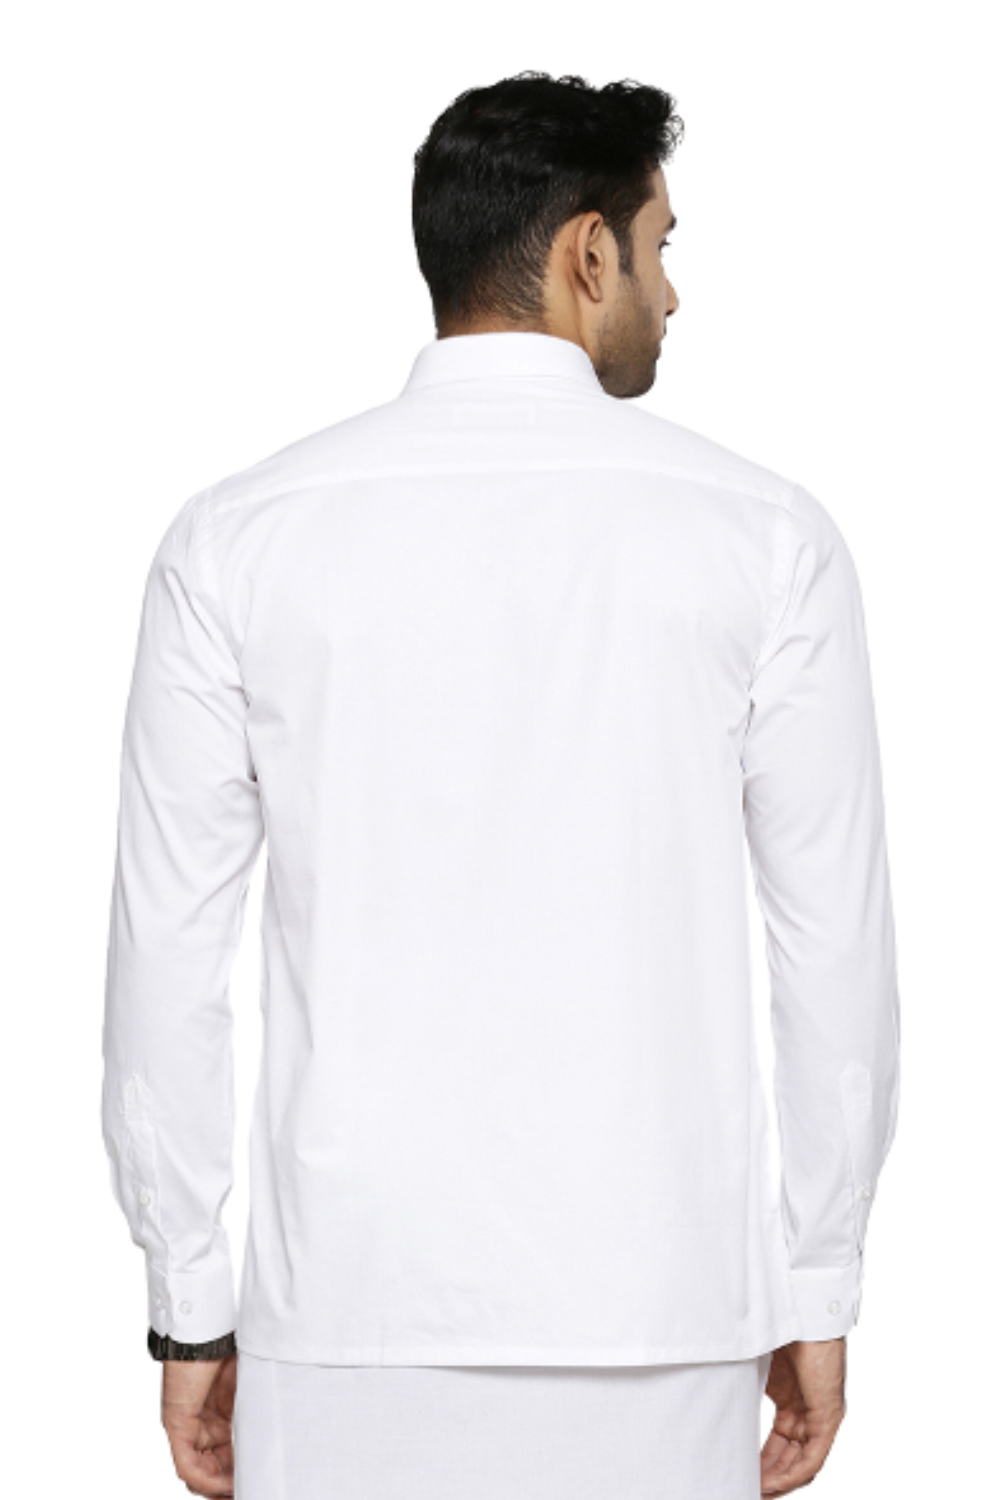 Mens 100% Cotton White Shirt Full Sleeves RR Image -Back view